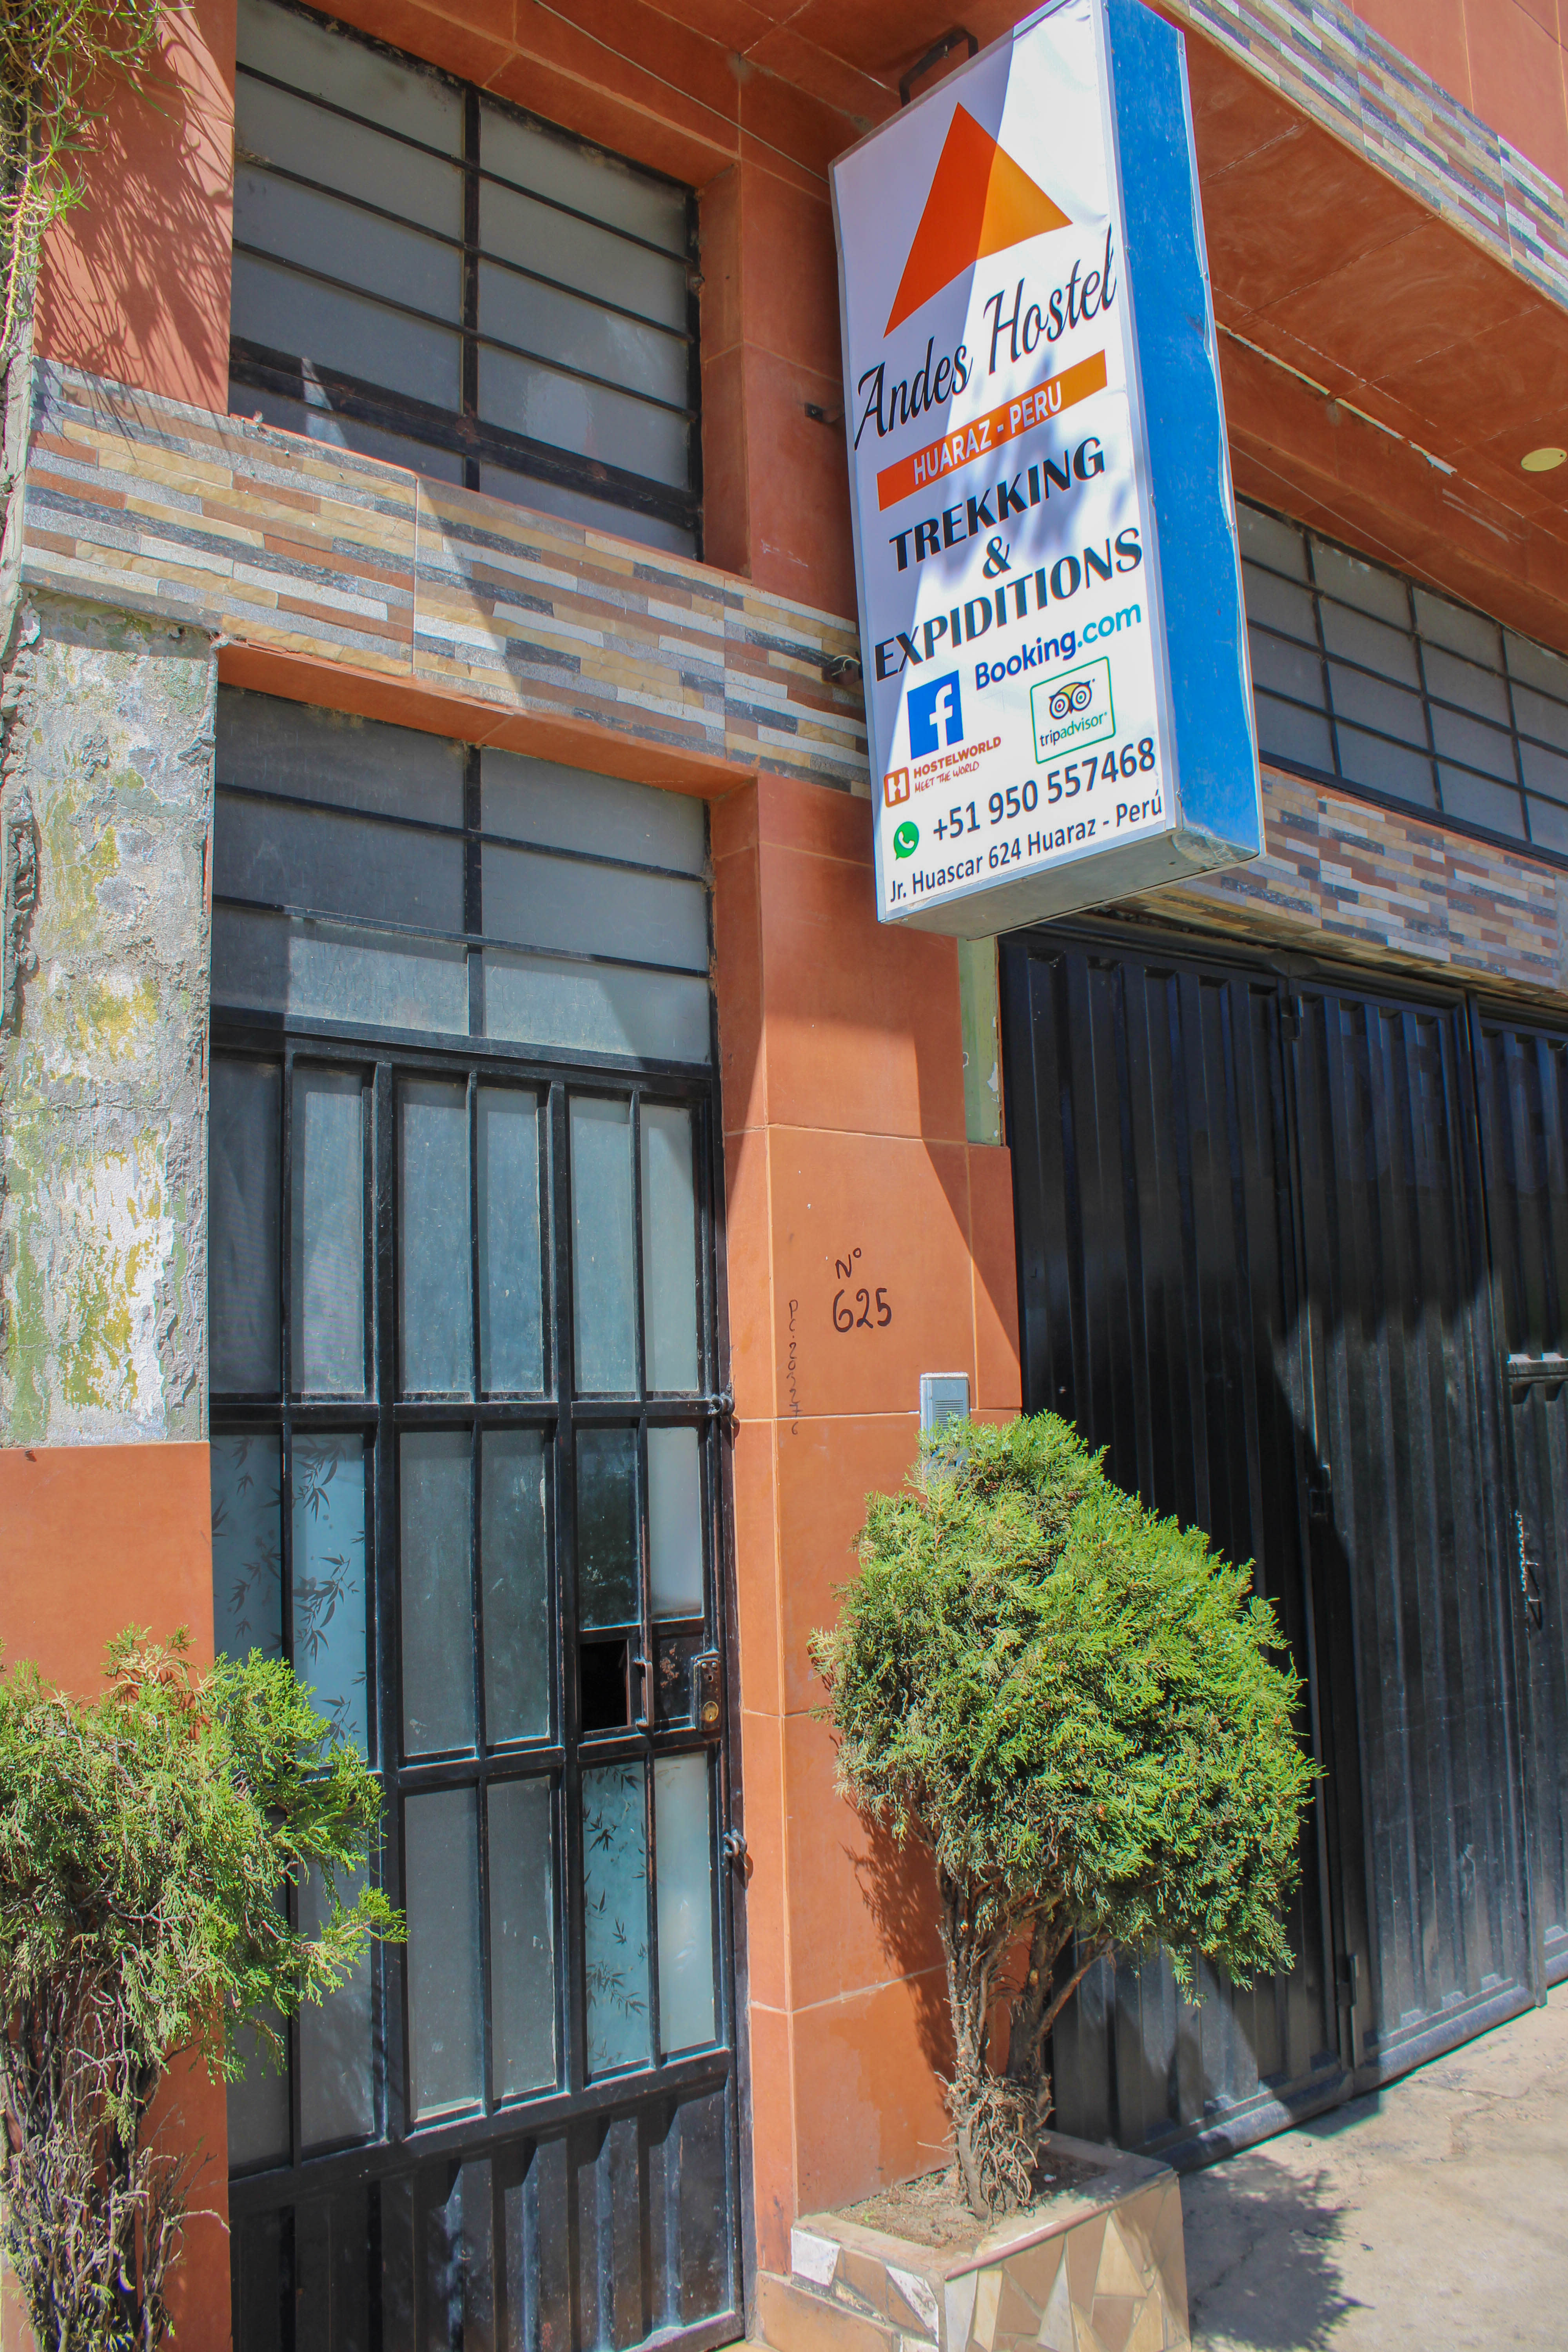 Andes Hostels - Huaraz